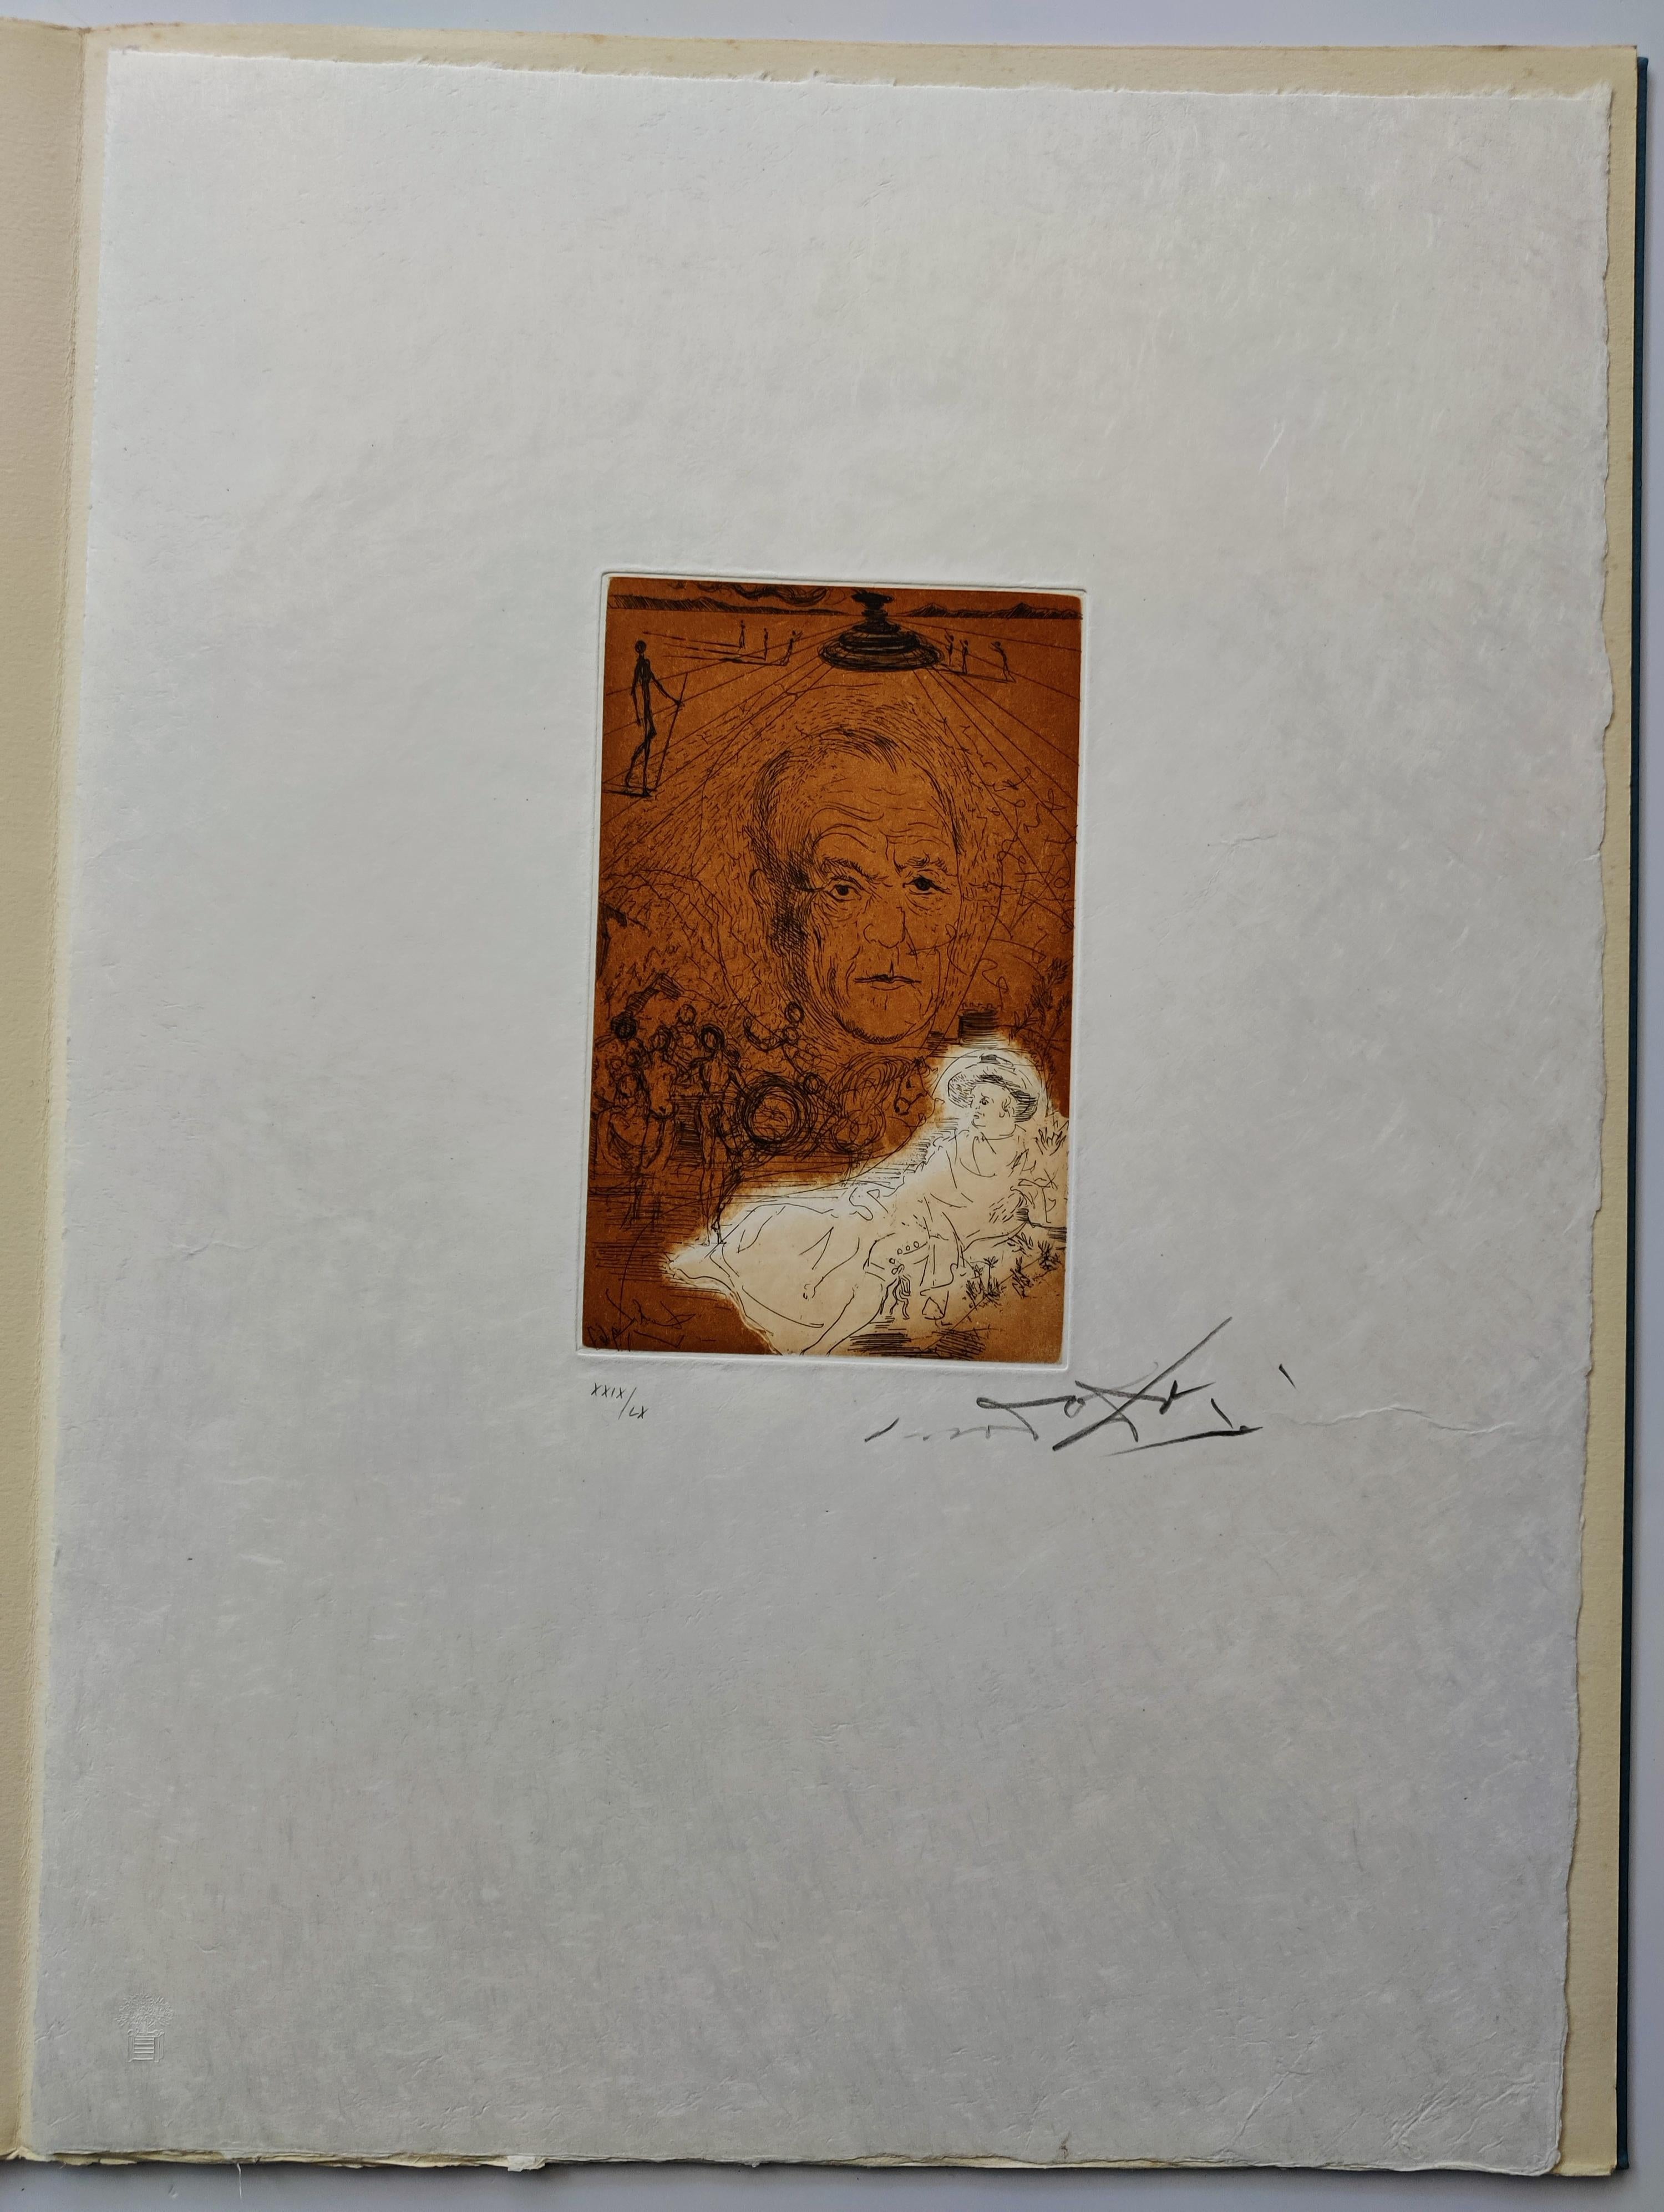 Salvador Dalí
Hommage à Konrad Adenauer, 1967
Colour etching on Japanese paper. In the original portfolio.
Depiction Size: 19.5 x 12.5cm.
Sheet Size: 52 x 38.5cm.
Edition: XXIX/LX
Hand-signed lower right
Publisher: Galerie Orangerie-Reint,